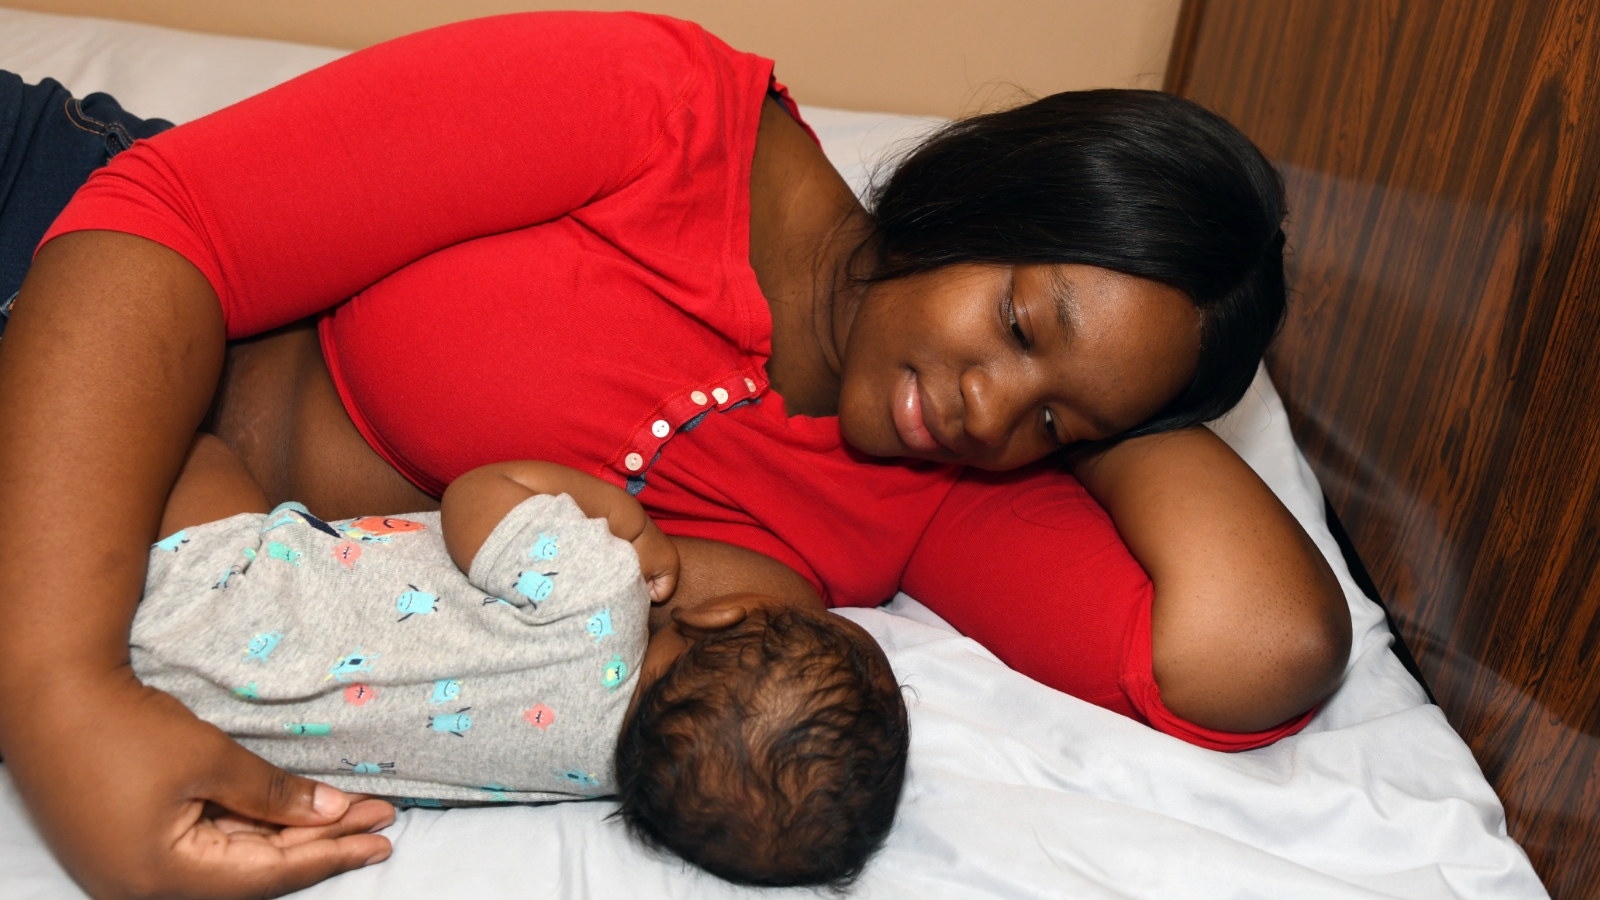 Breastfeeding & Safe Sleep